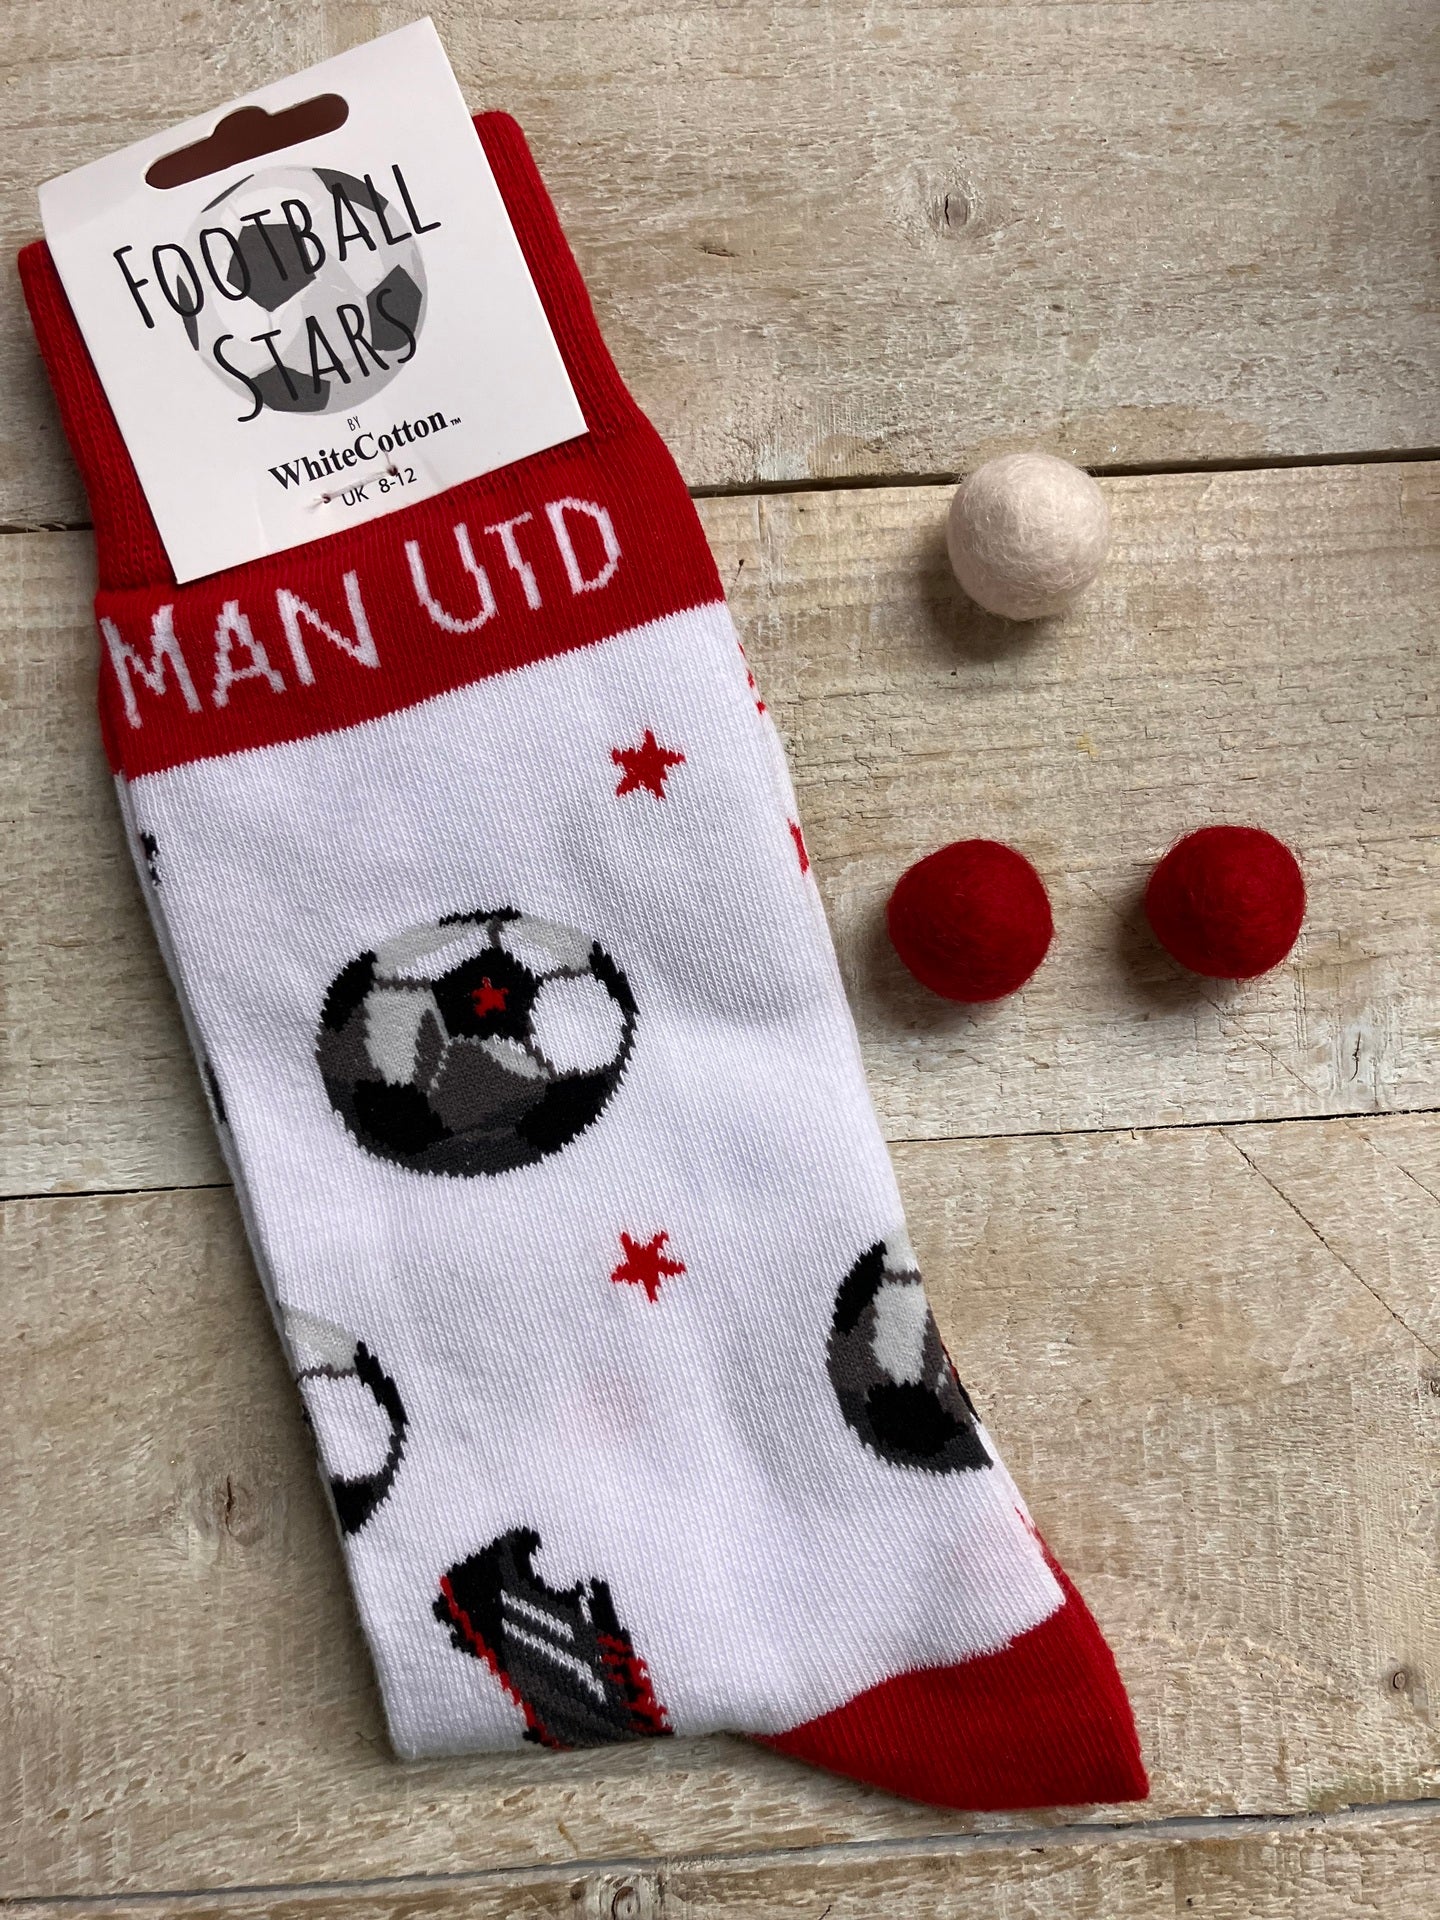 Man Utd Football Stars Socks - Zhivago Gifts